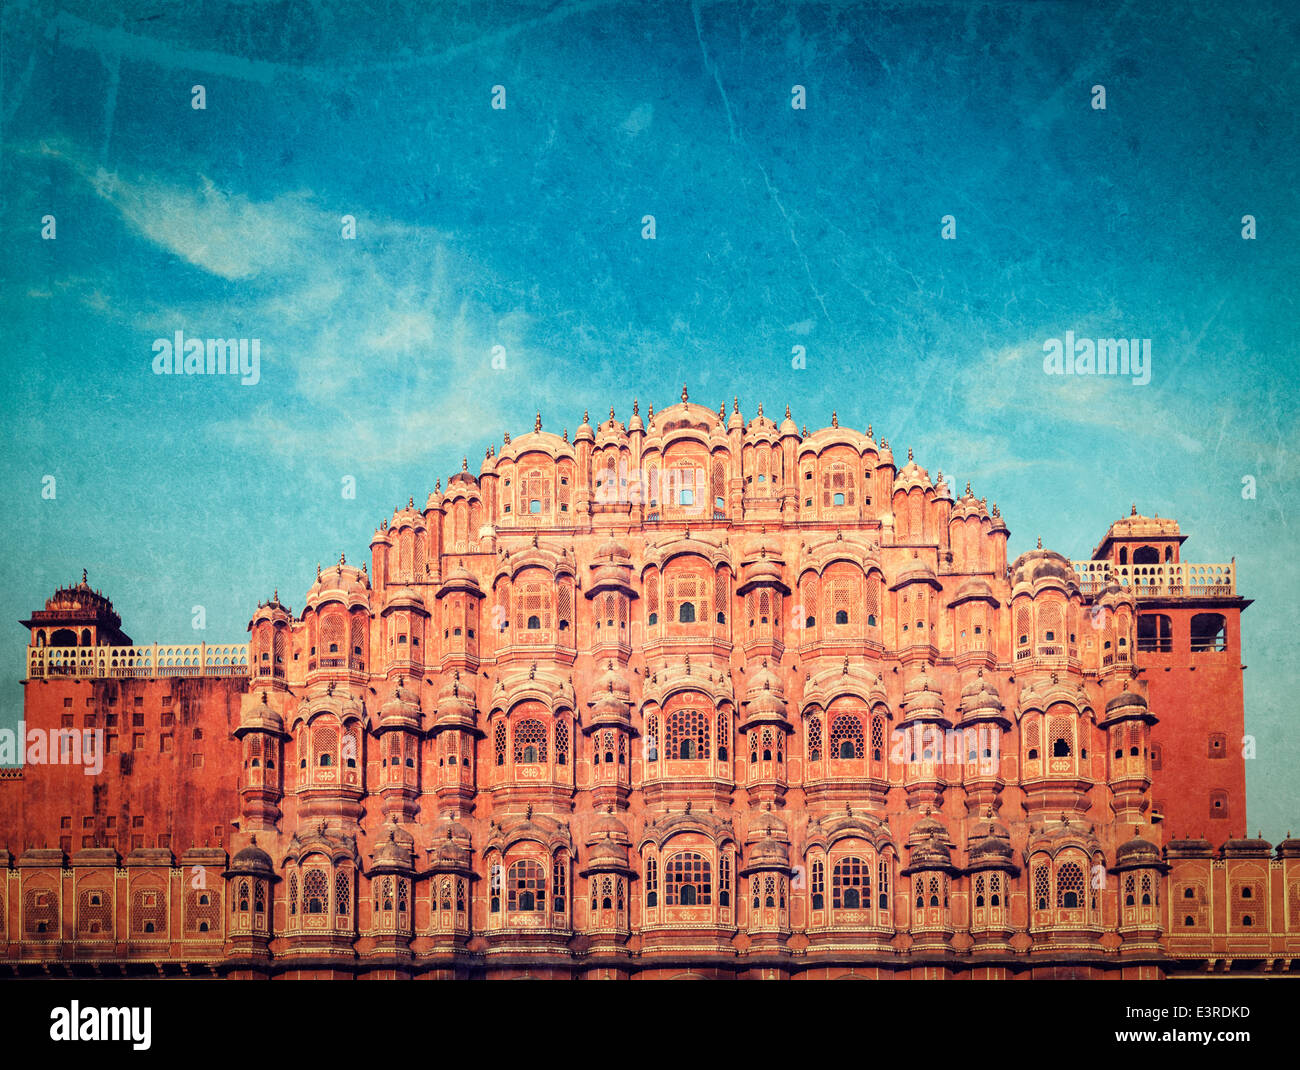 Vintage retrò stile hipster travel immagine della famosa Rajasthan landmark - Hawa Mahal Palace (Palazzo dei venti), Jaipur, India Foto Stock